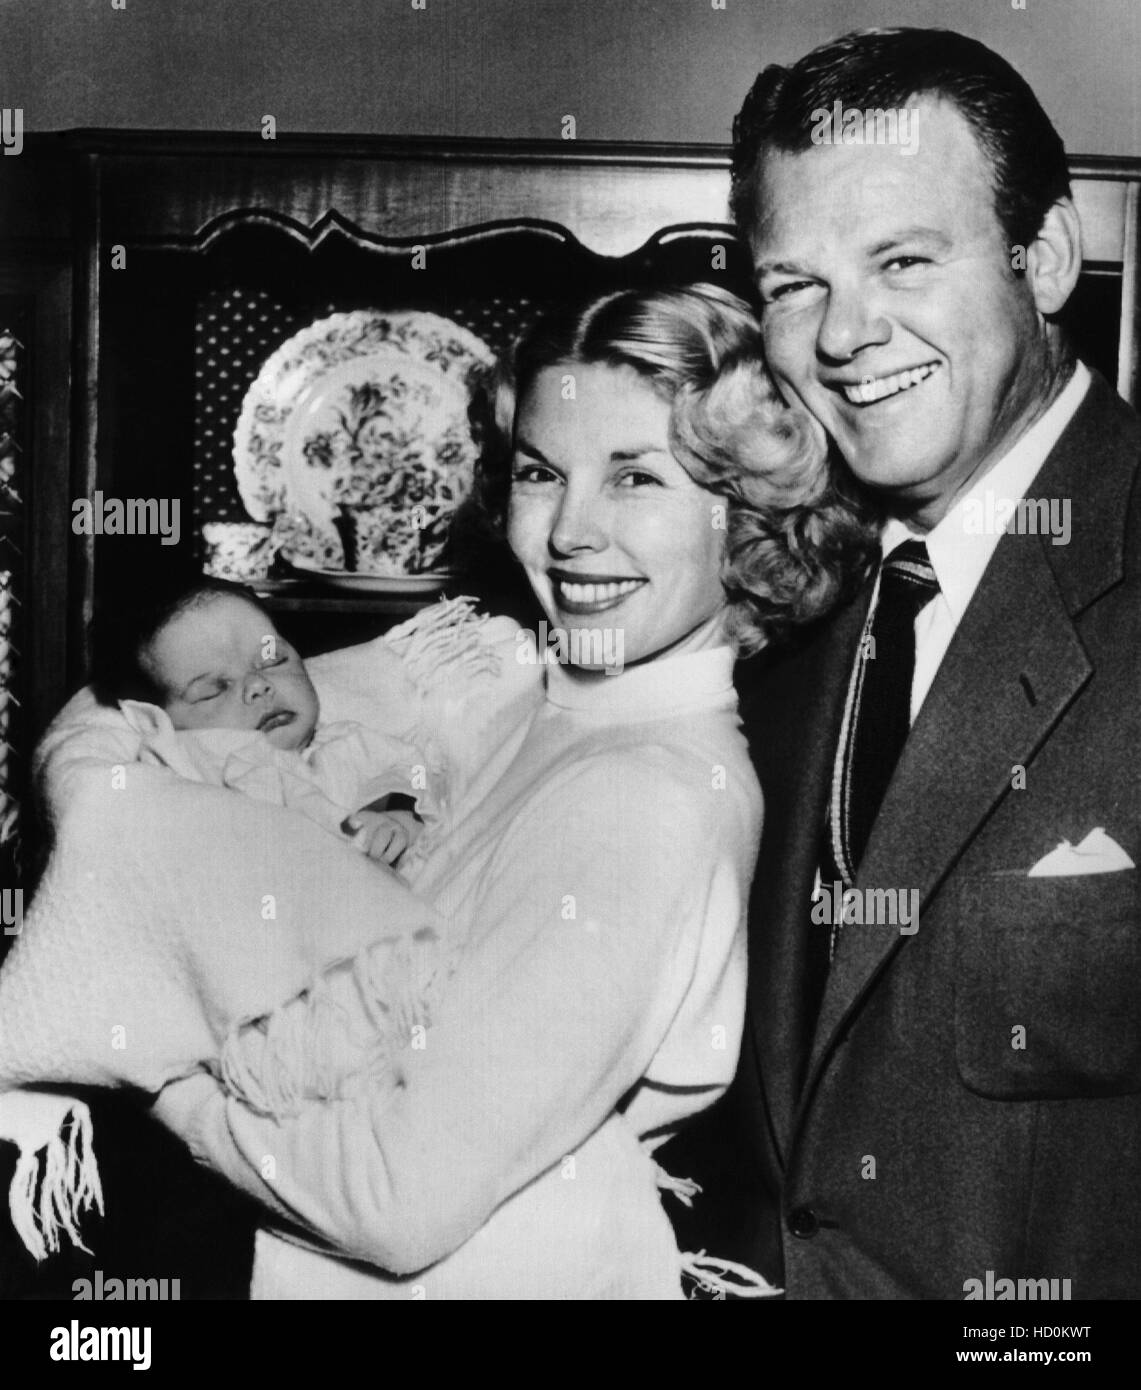 Naomi and Alan Hale Jr. with their daughter, Lana Hale, 1952 Stock Photo -  Alamy